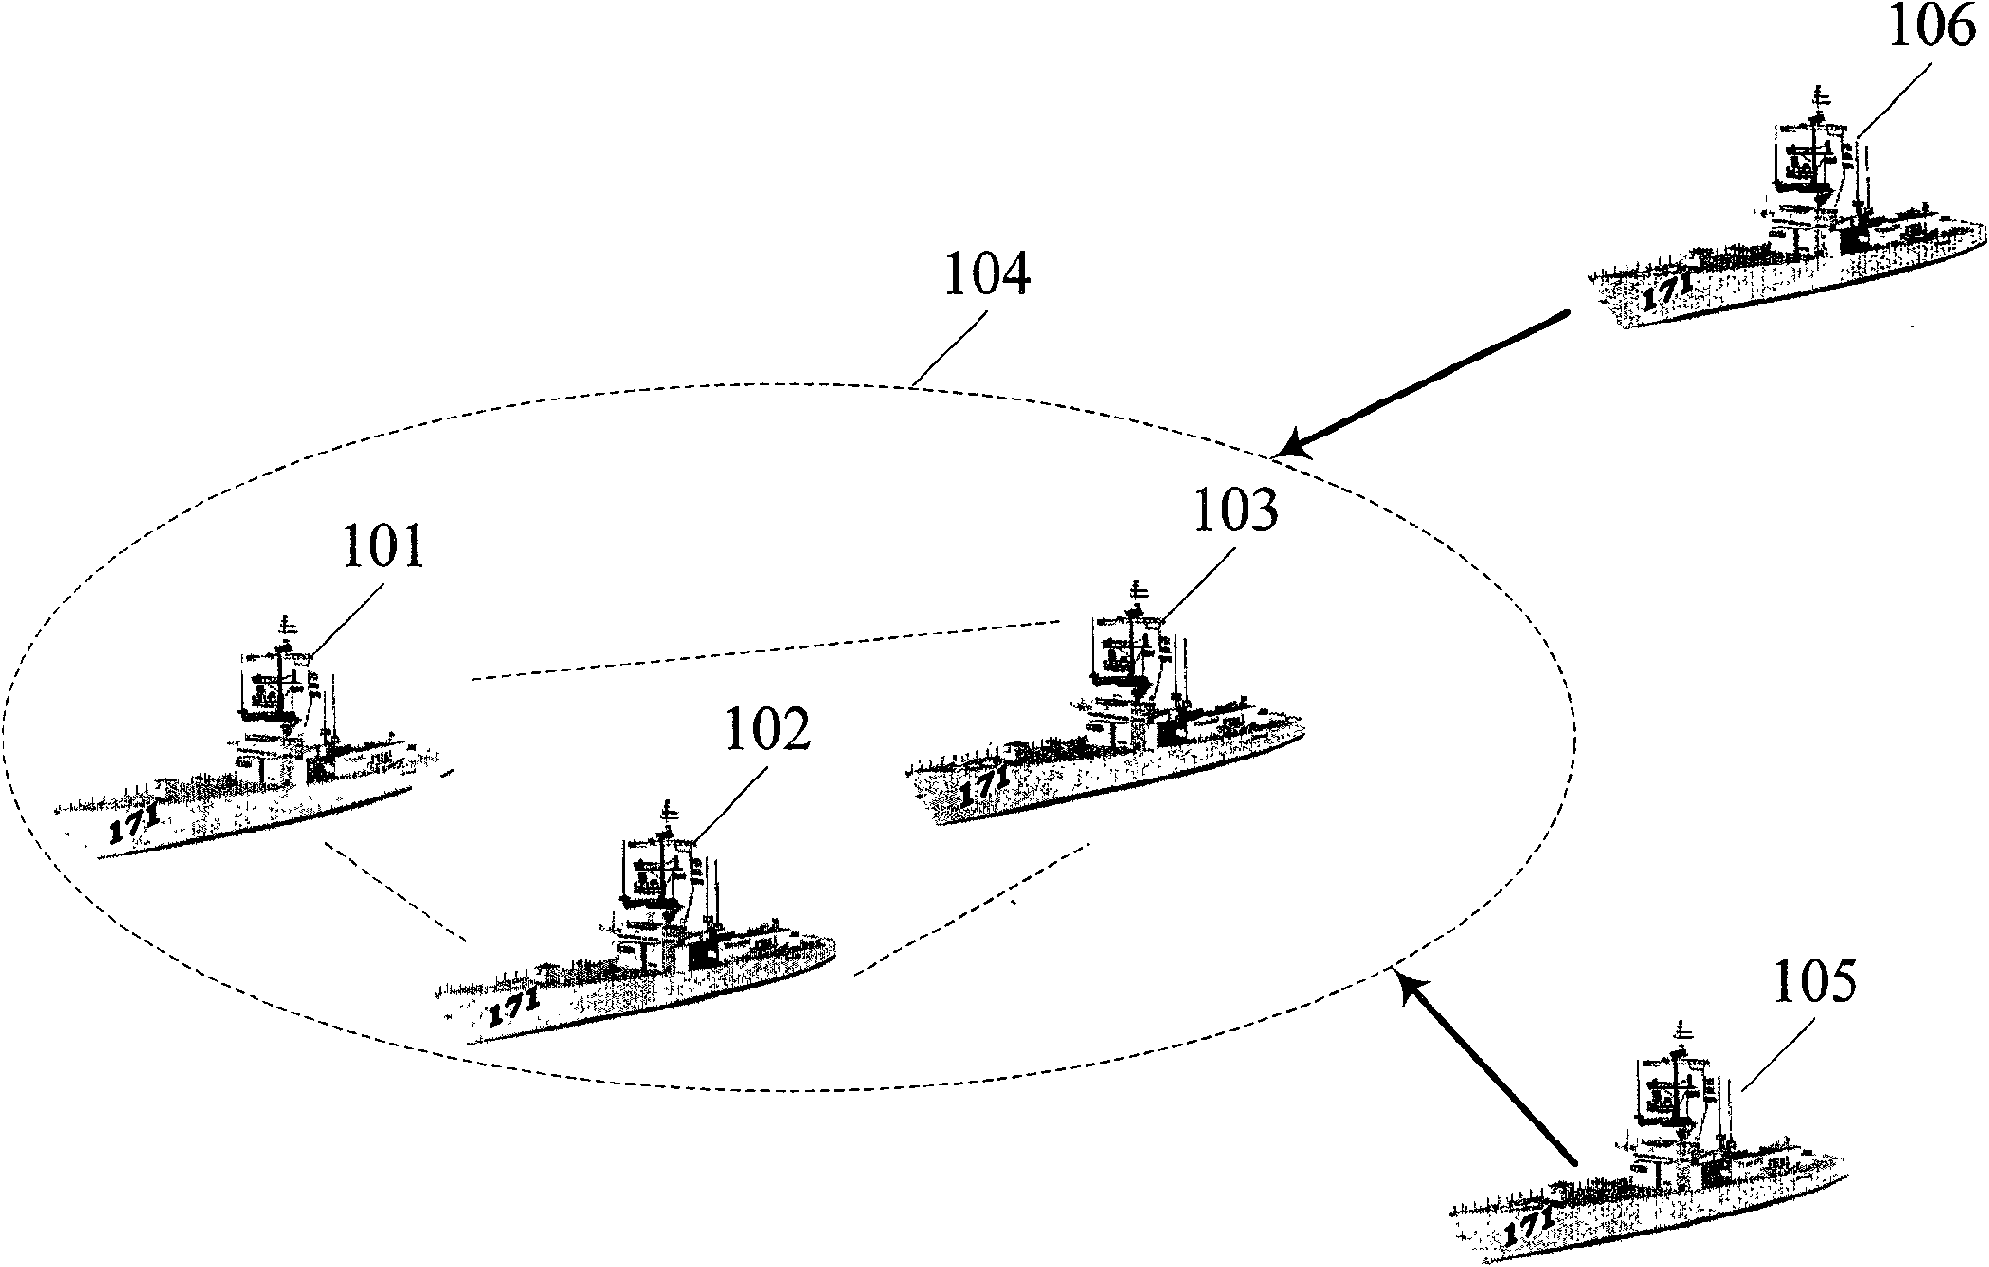 Ships fast self-networking method based on GPS information